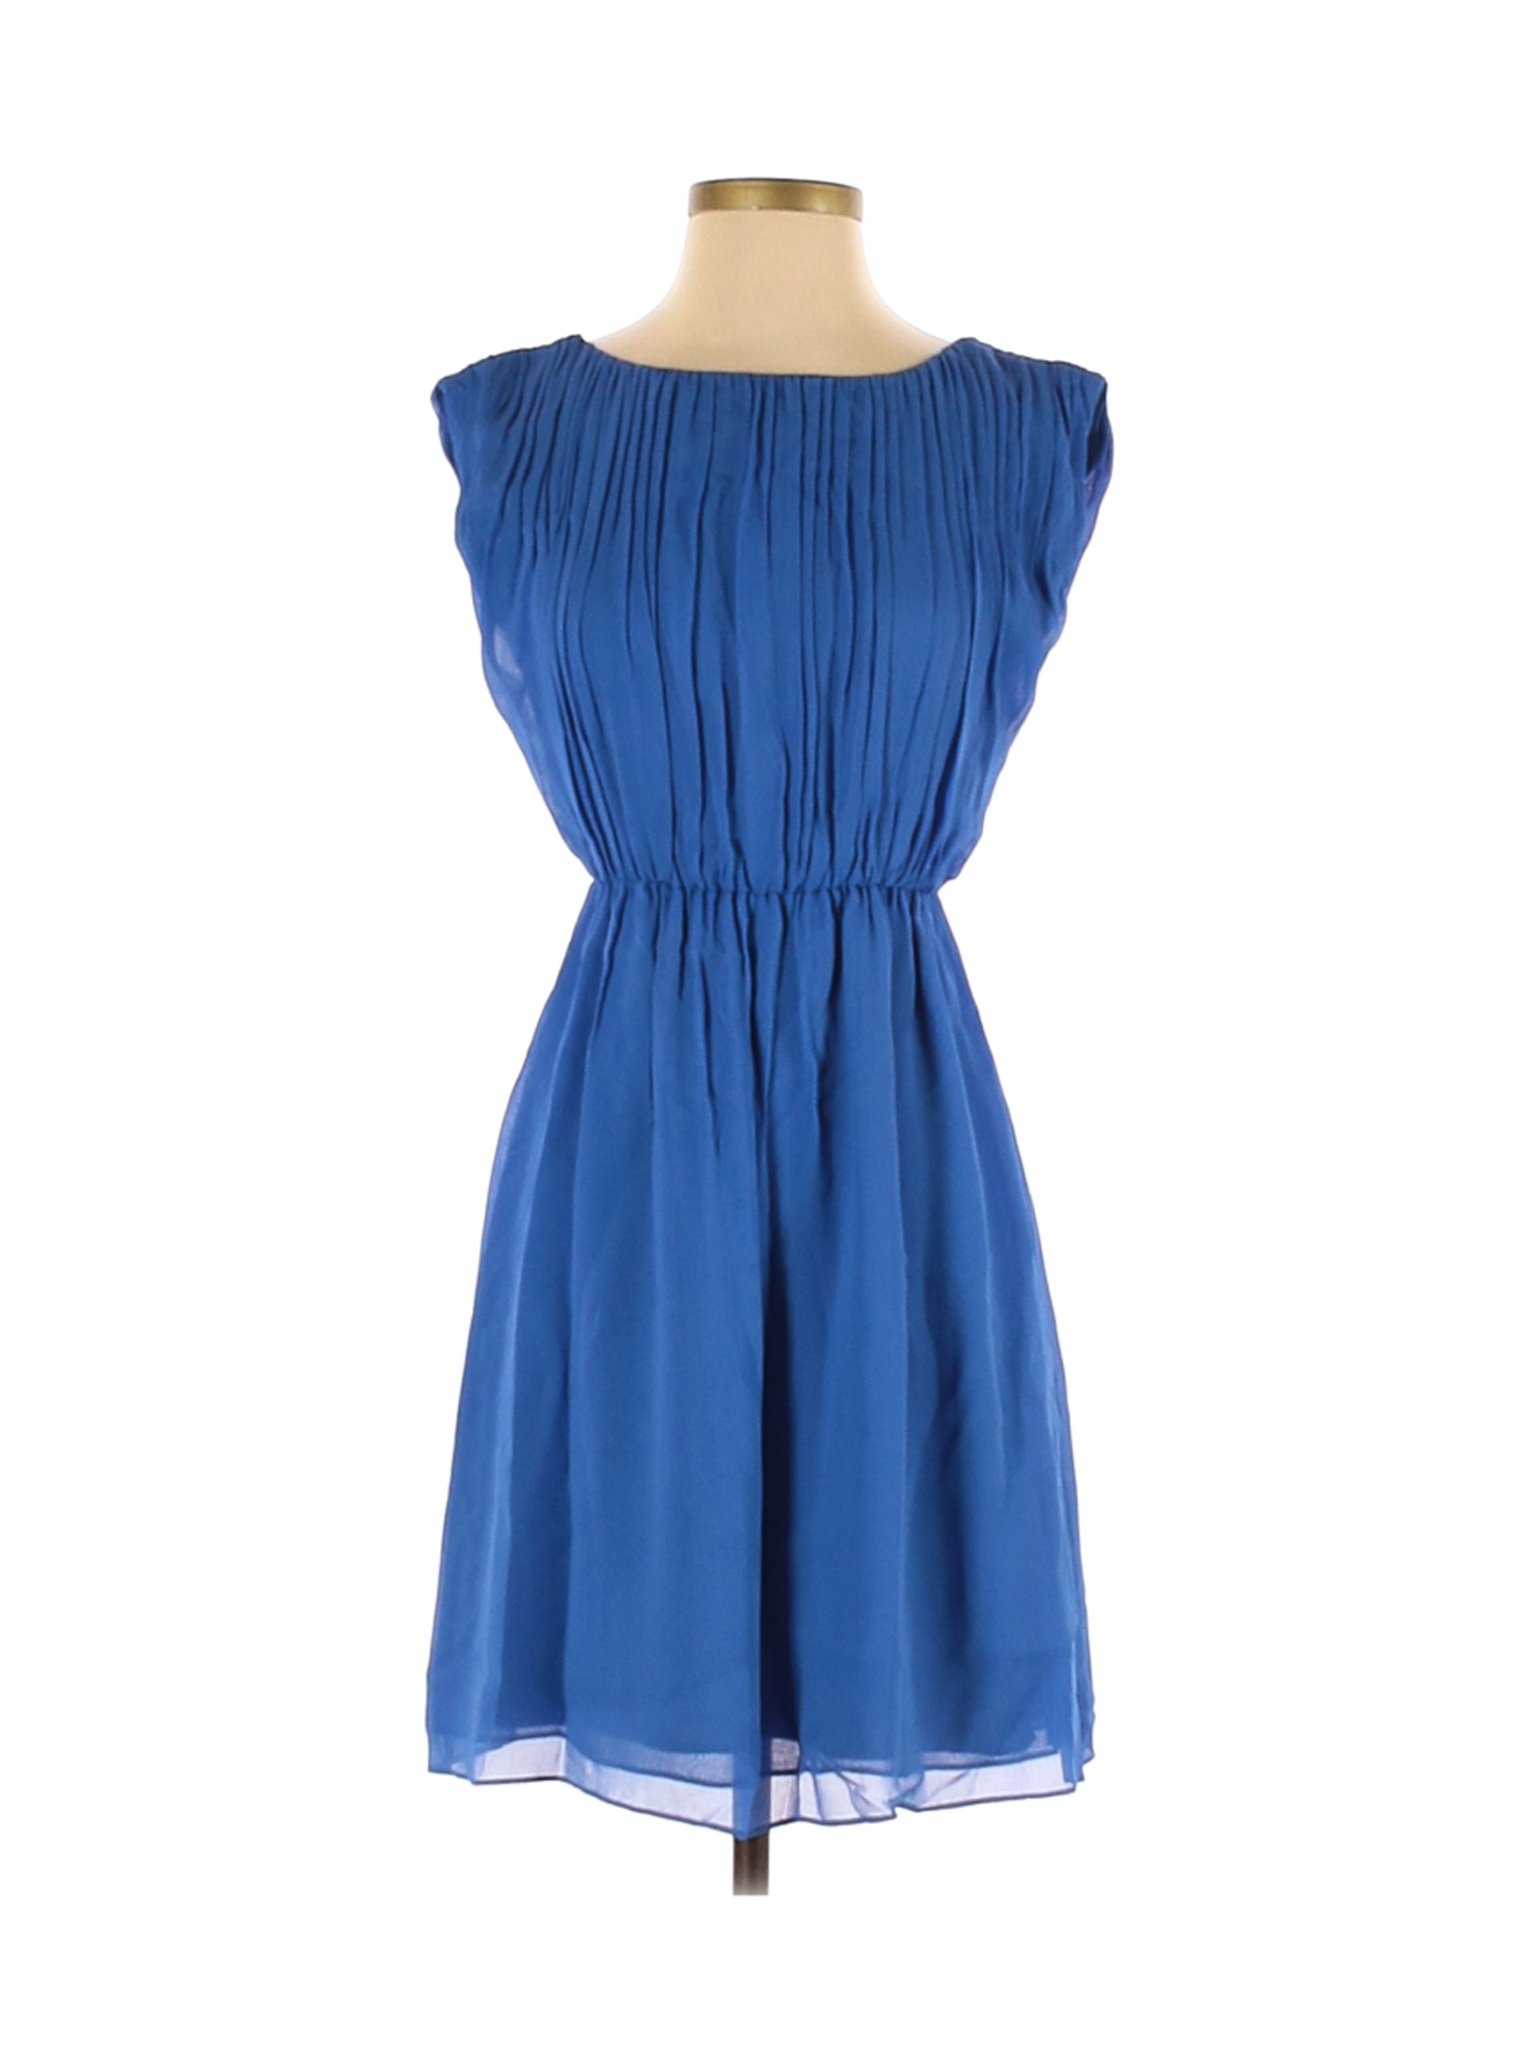 Alice + Olivia Women Blue Casual Dress XS | eBay